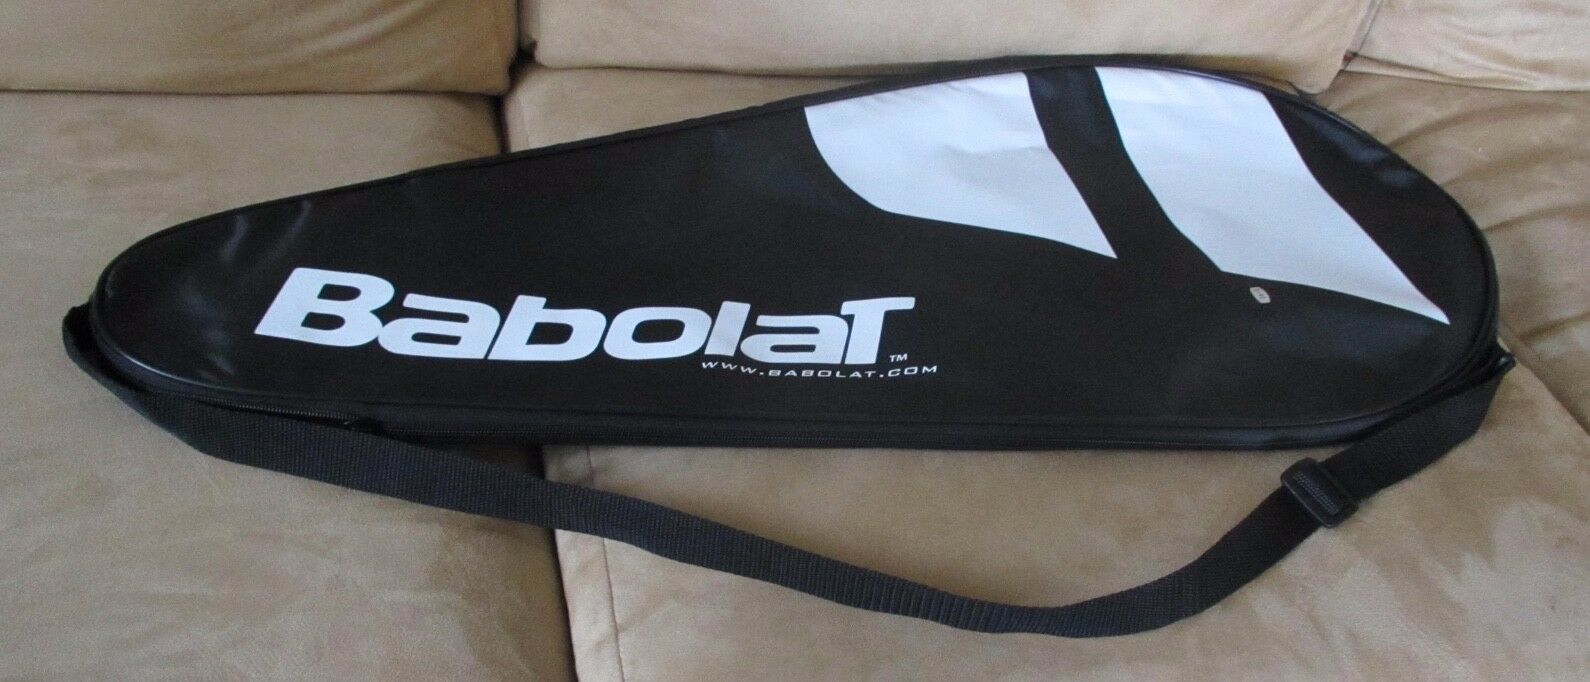 Babolat Tennis Cover/ Bag With Adjustable Shoulder Strap -- New!